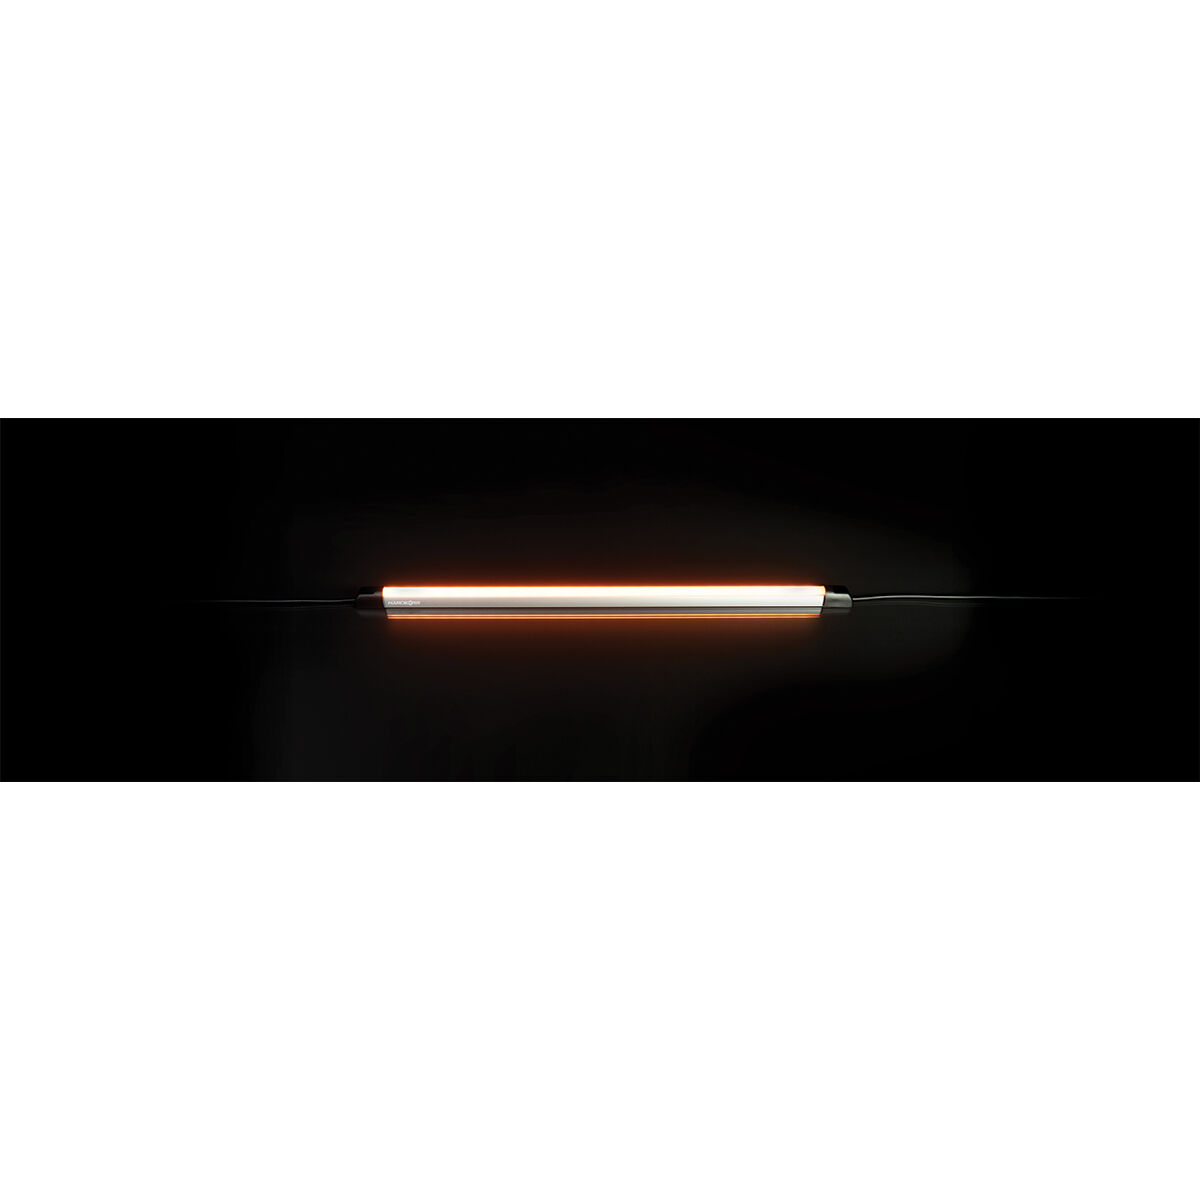 Hardkorr LED Light Bar with Diffuser - Orange / White 48cm, , scaau_hi-res